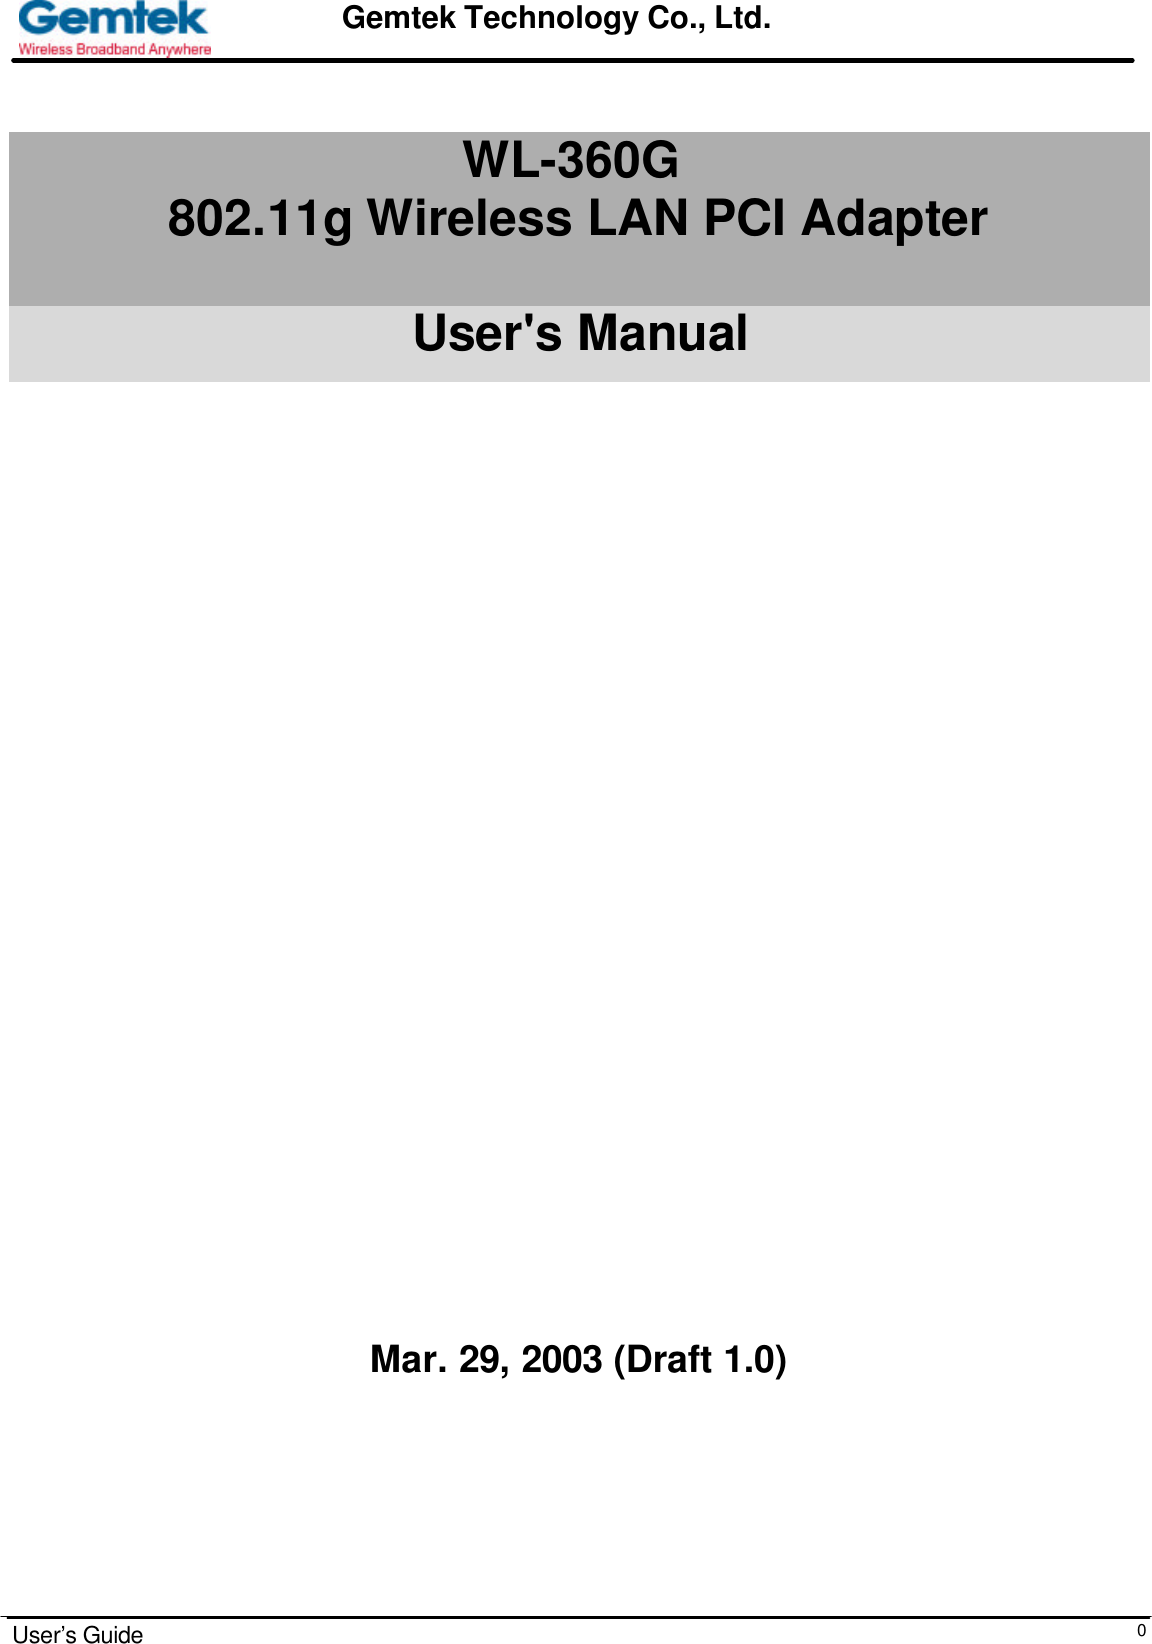                                                                                                                                                                                                                                                                      User’s Guide  0Gemtek Technology Co., Ltd. WL-360G 802.11g Wireless LAN PCI Adapter  User&apos;s Manual                                                                                                          Mar. 29, 2003 (Draft 1.0)       